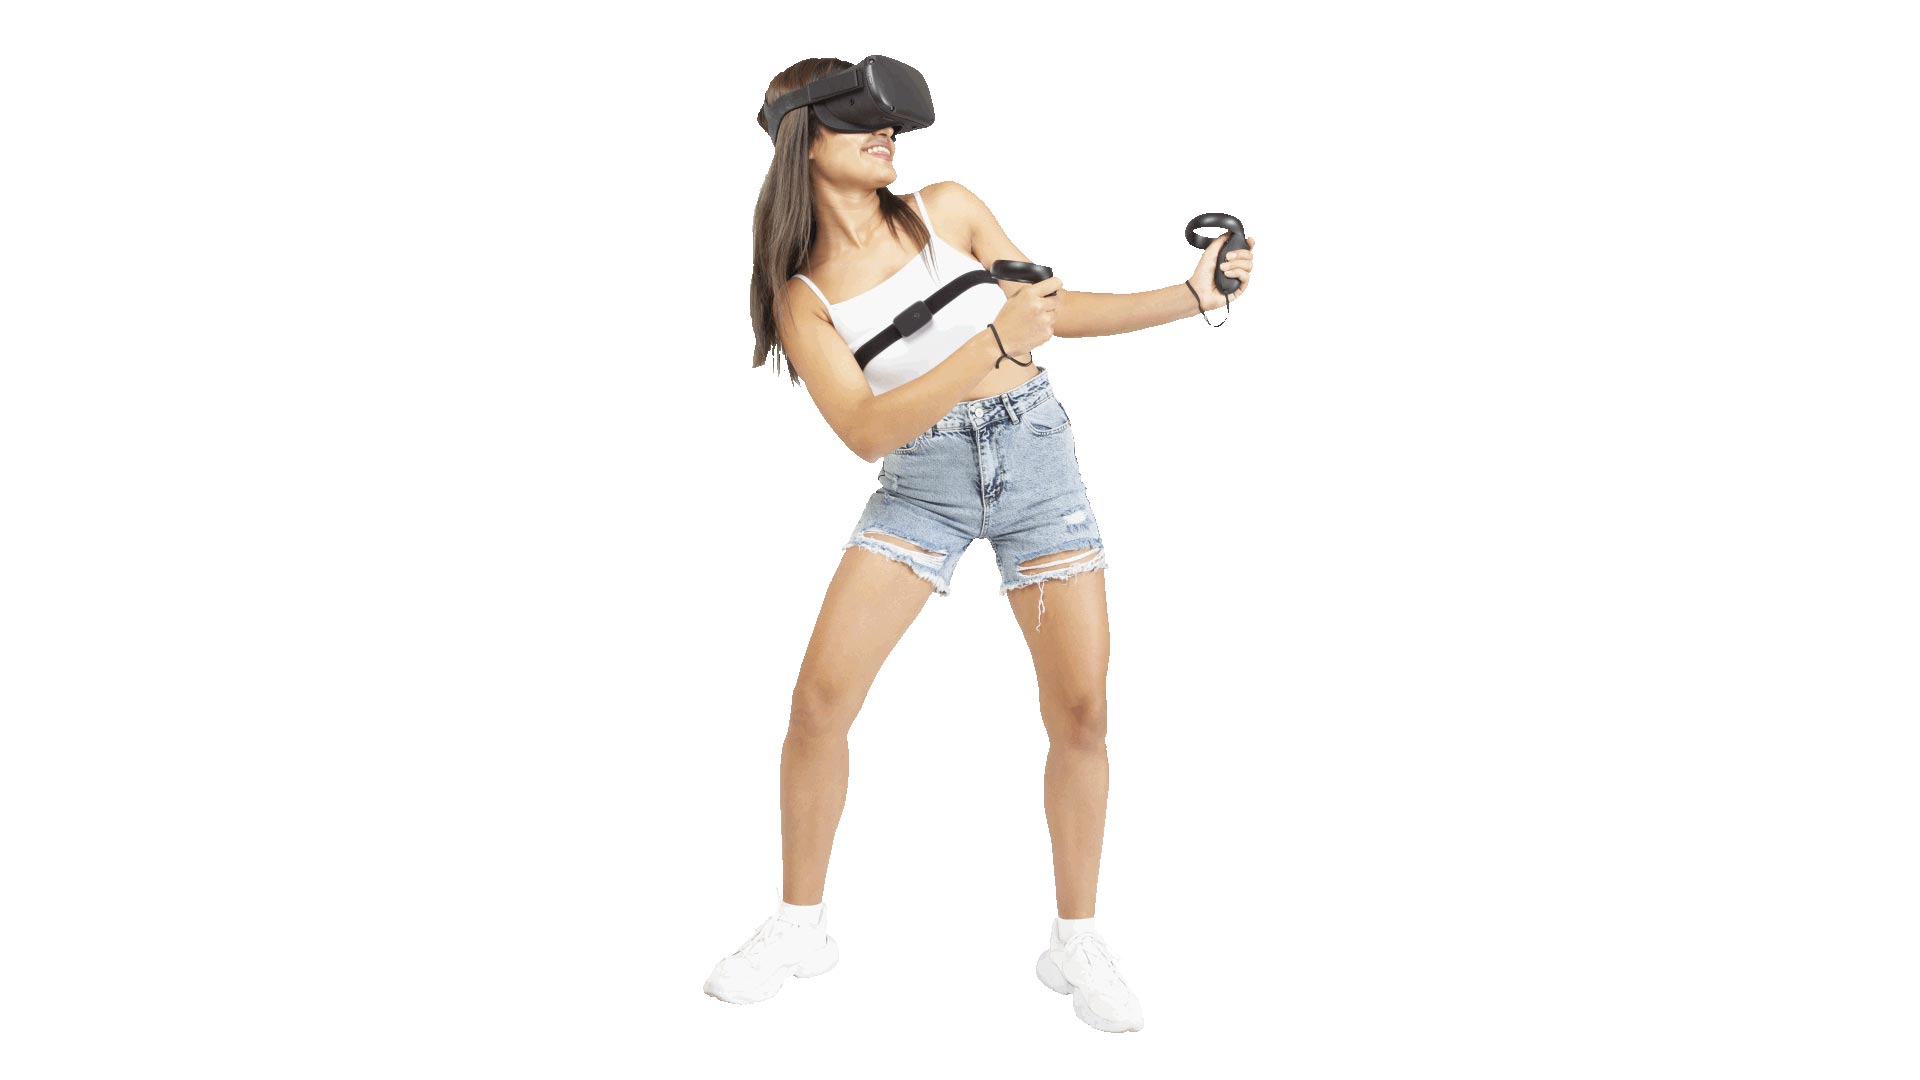 walkovr tracking solution virtual reality